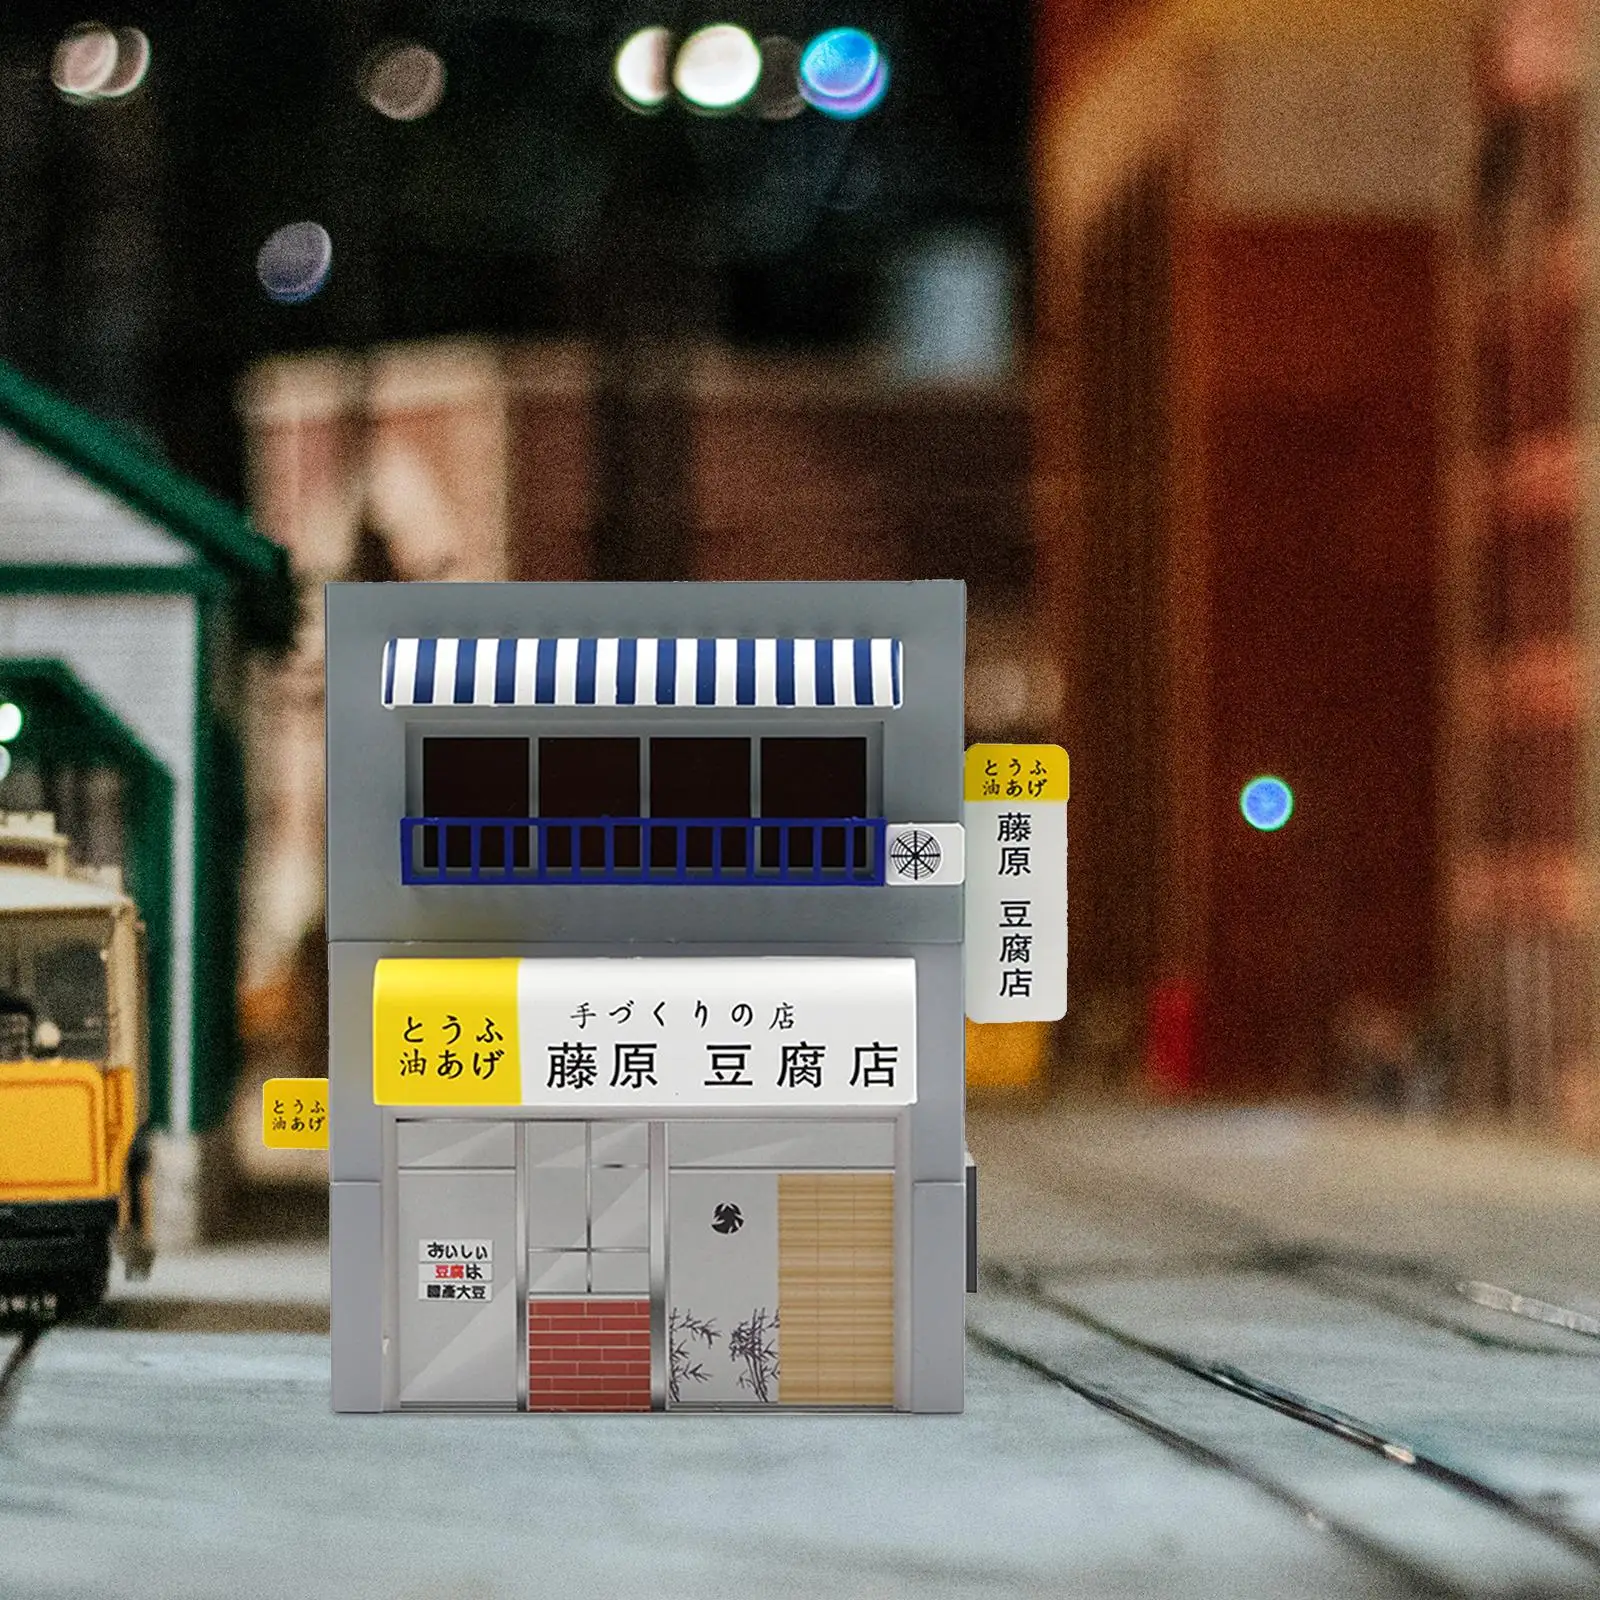 1/64 Tofu Shop Diorama Model Architectural Micro Landscape S Scale Desktop Collection Scenery Store DIY Projects Scenery Decor